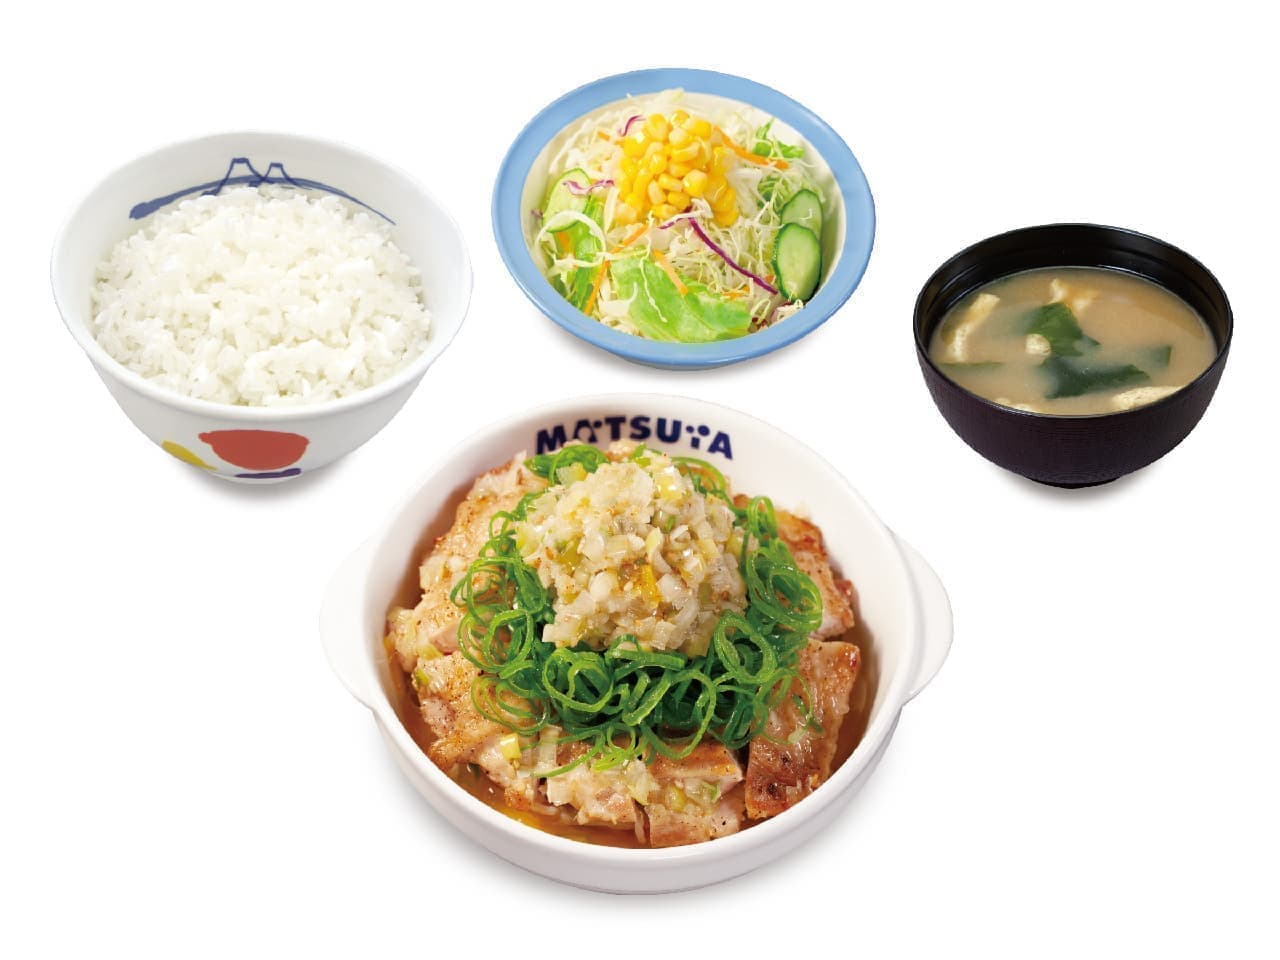 Matsuya "Negi Negi-Shio Chicken Grilled Set Meal